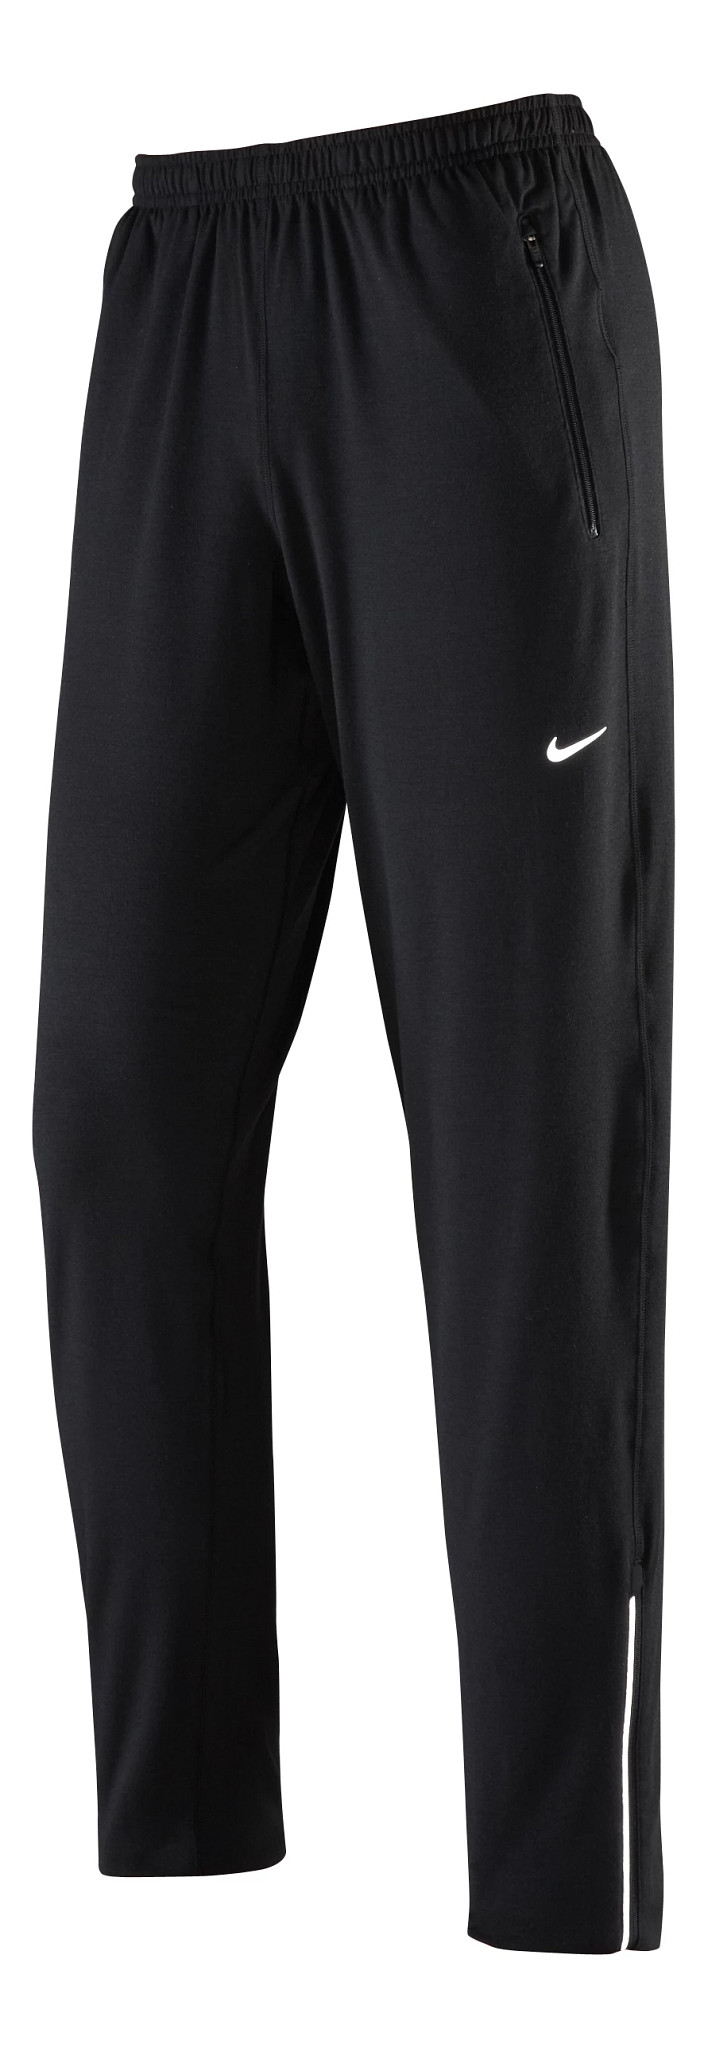 Mens Nike Perfect Track Full Length Pants